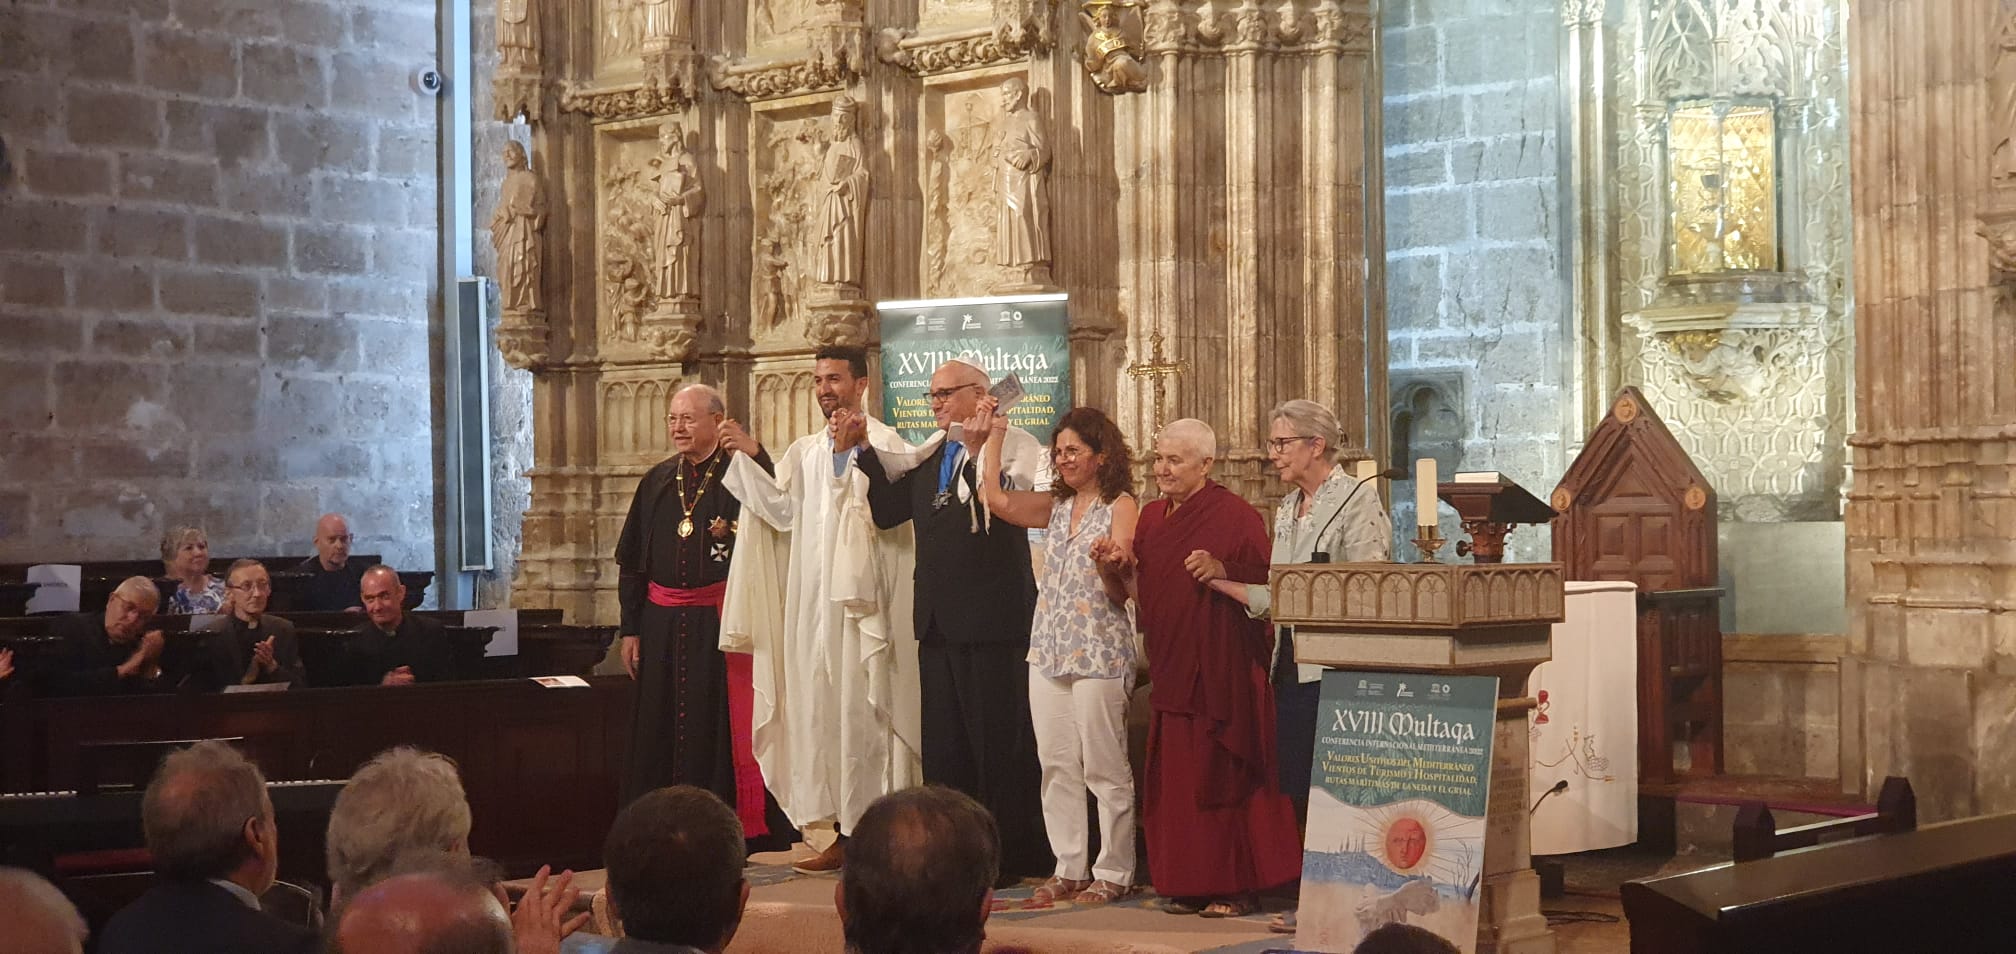 XVIII Multaqa: Encuentro interreligioso en torno al Santo Grial